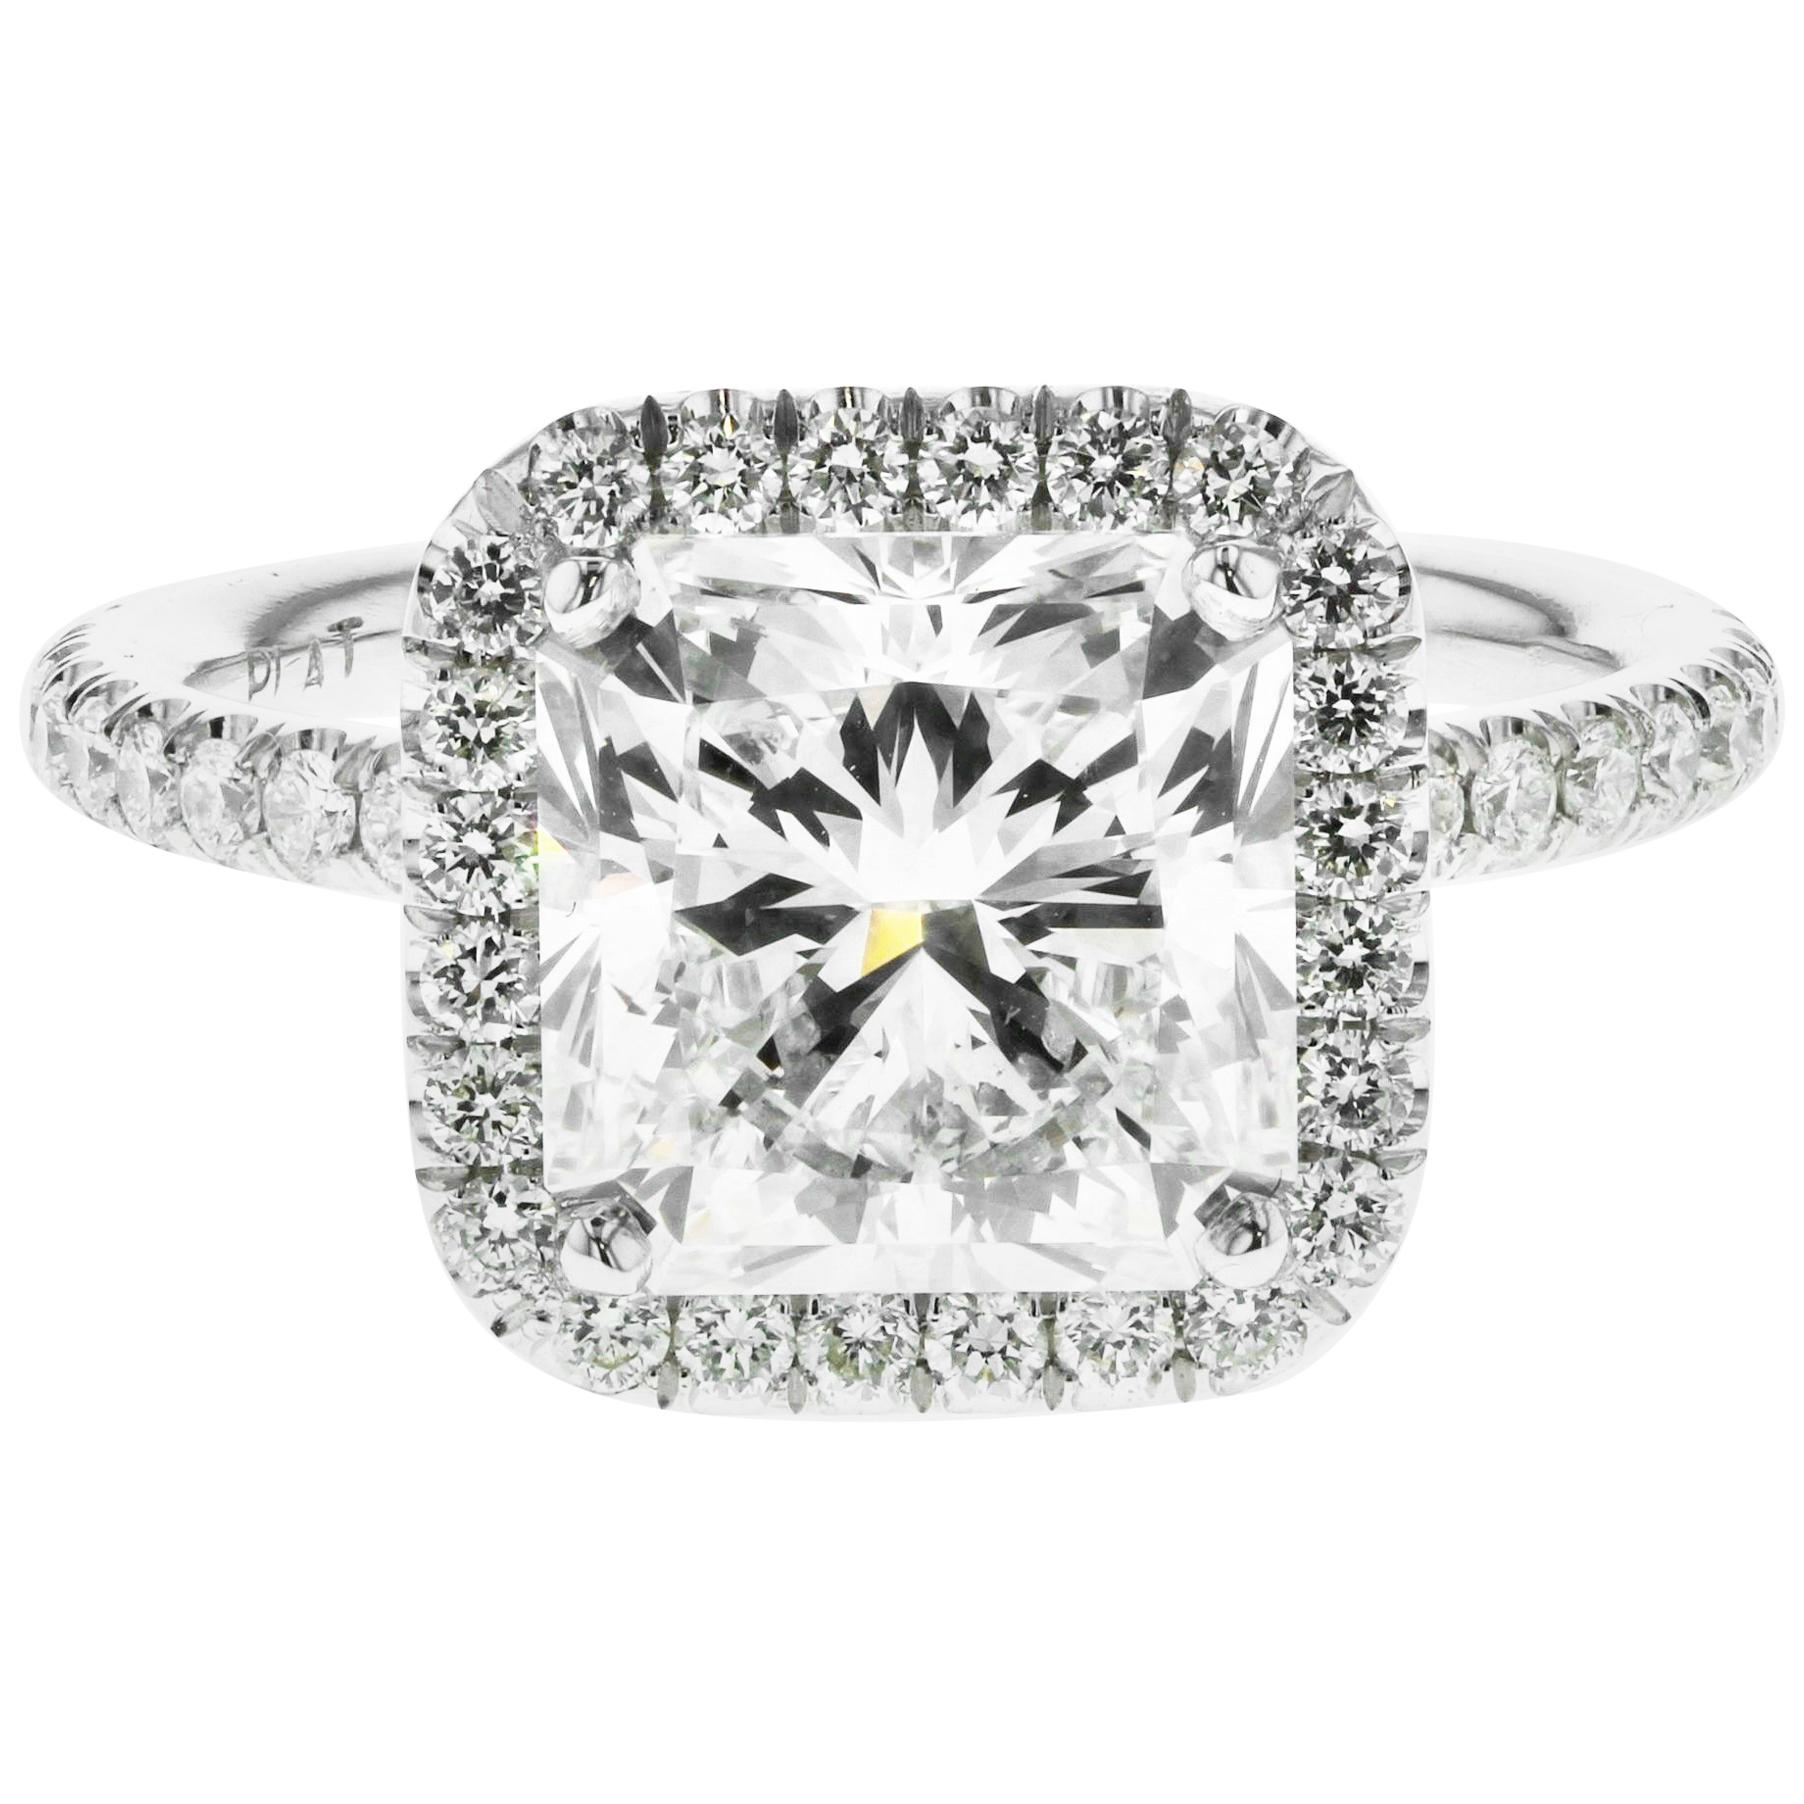 3.01 Carat Radiant Cut Diamond Engagement Ring GIA in Platinum Diamond Halo For Sale